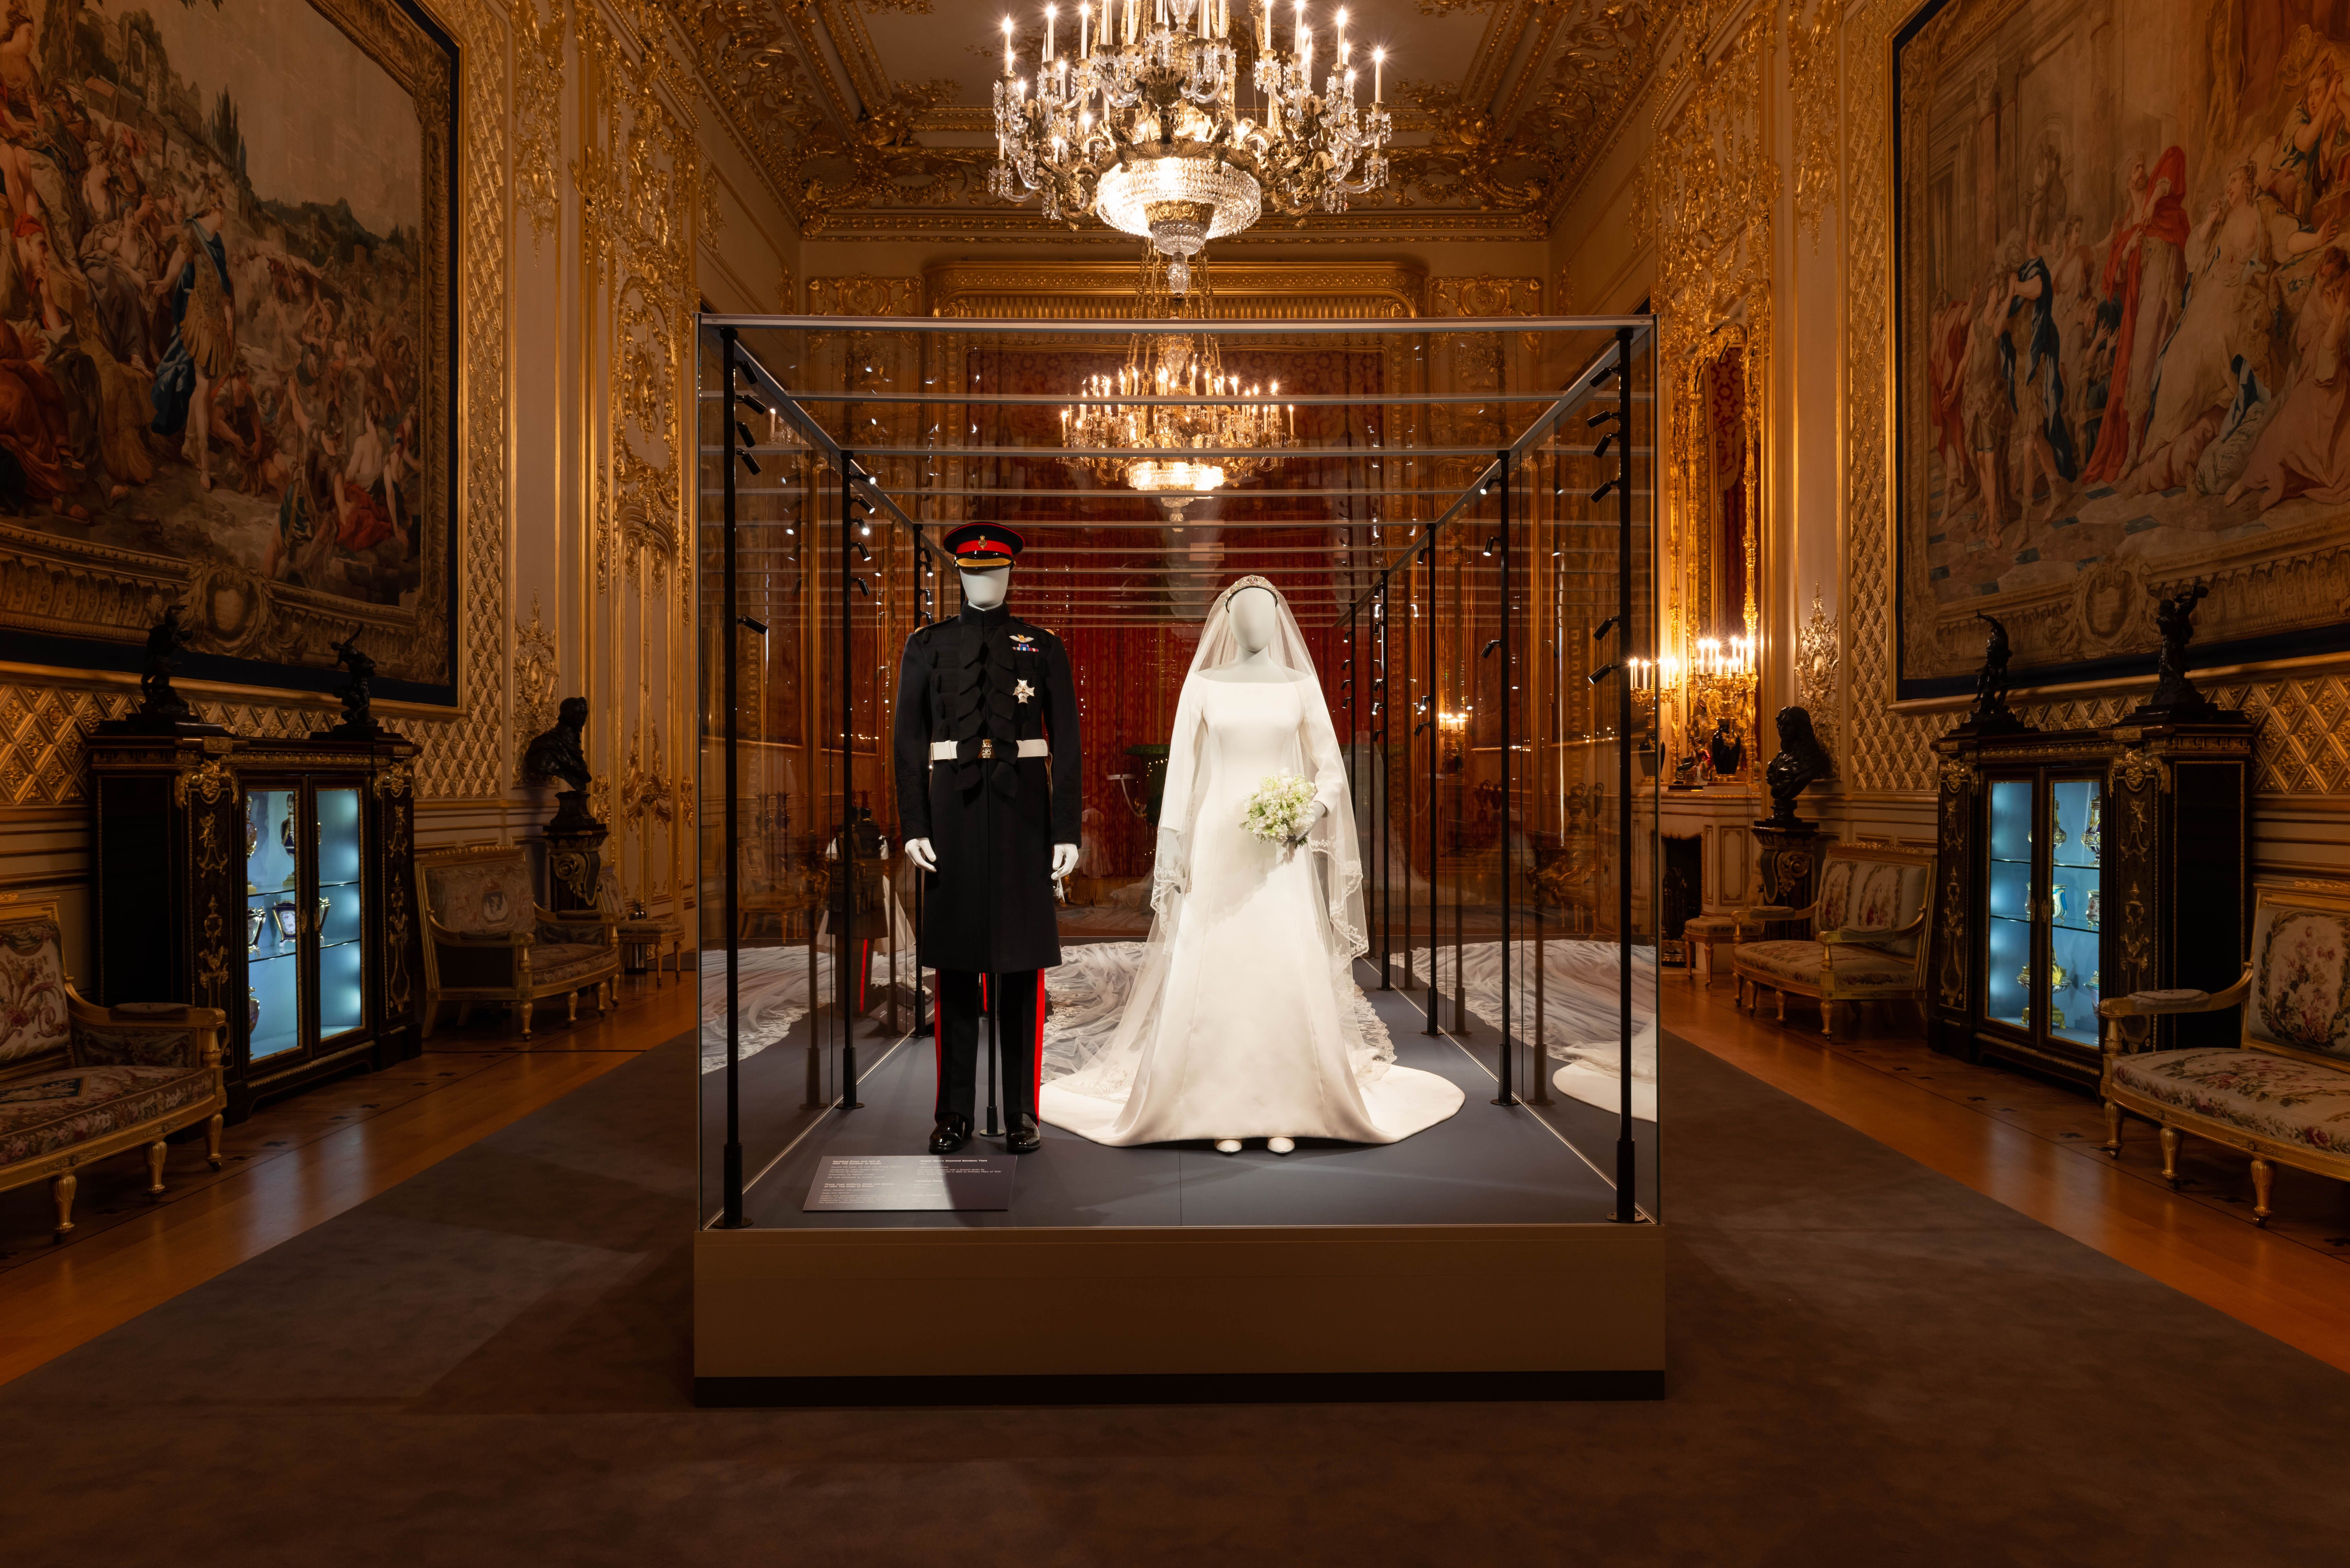 Meghan Markle's Wedding Dress On Display - Inside The Duke and